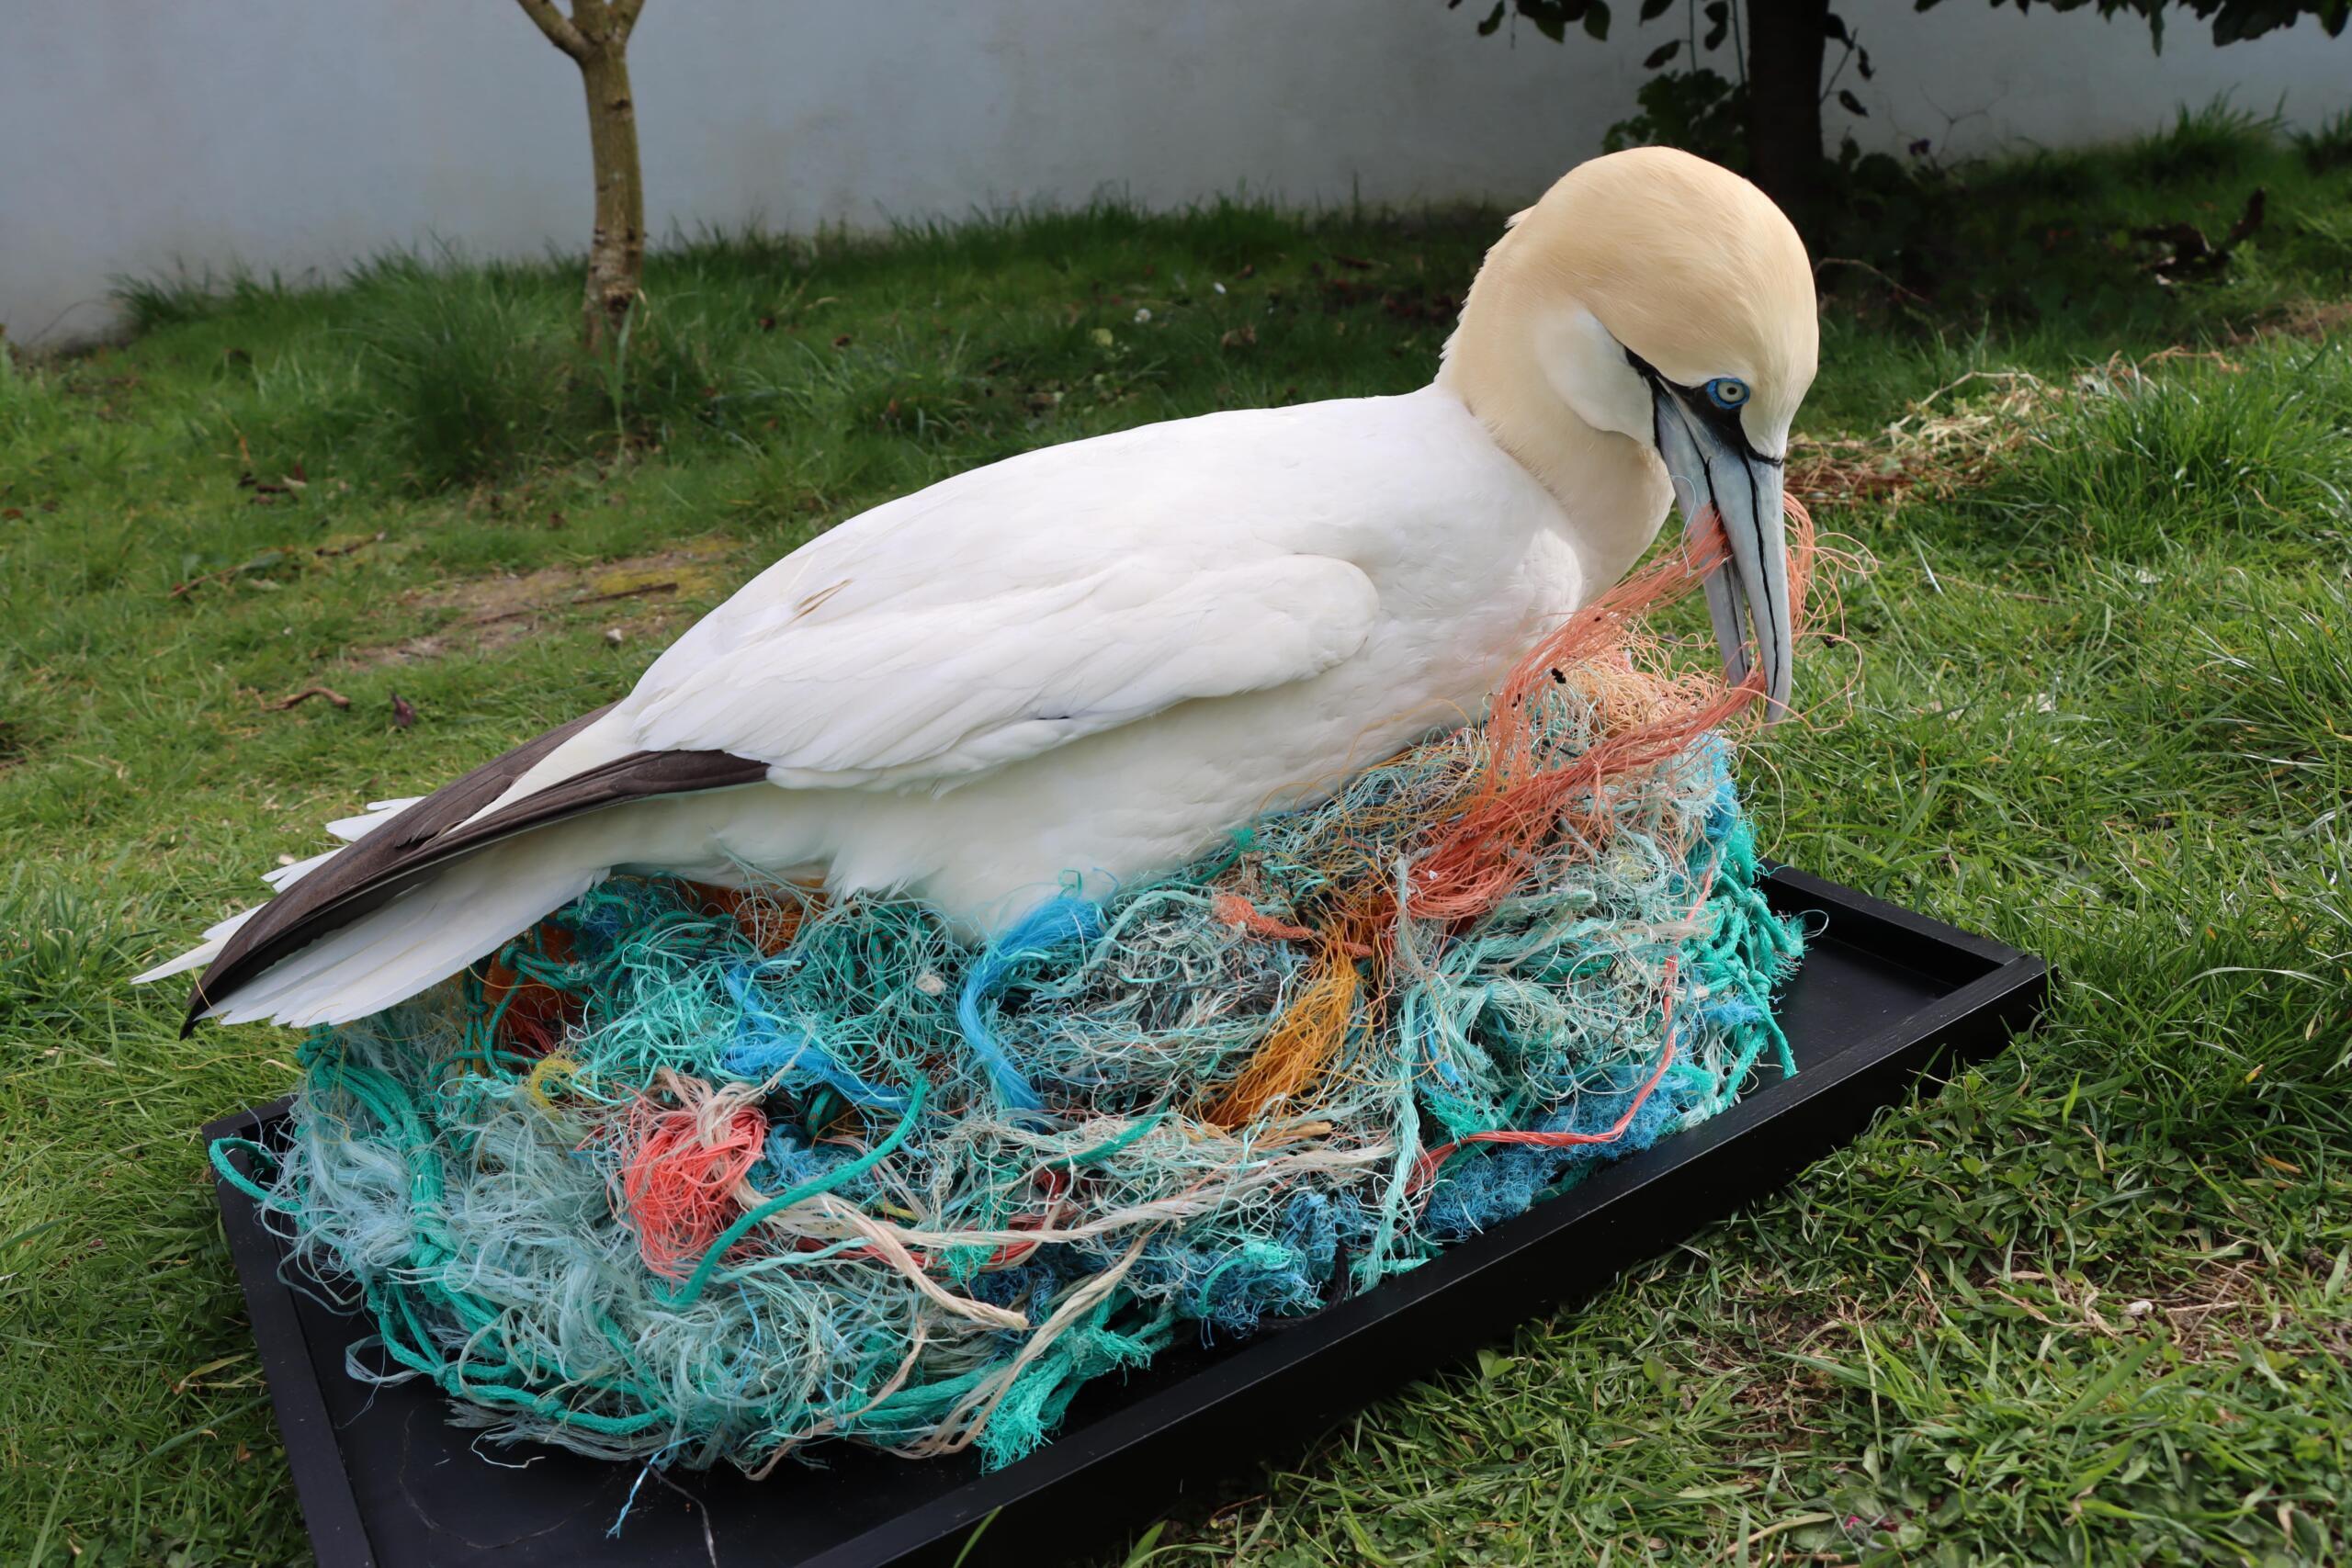 Northern Gannet on nest of plastic